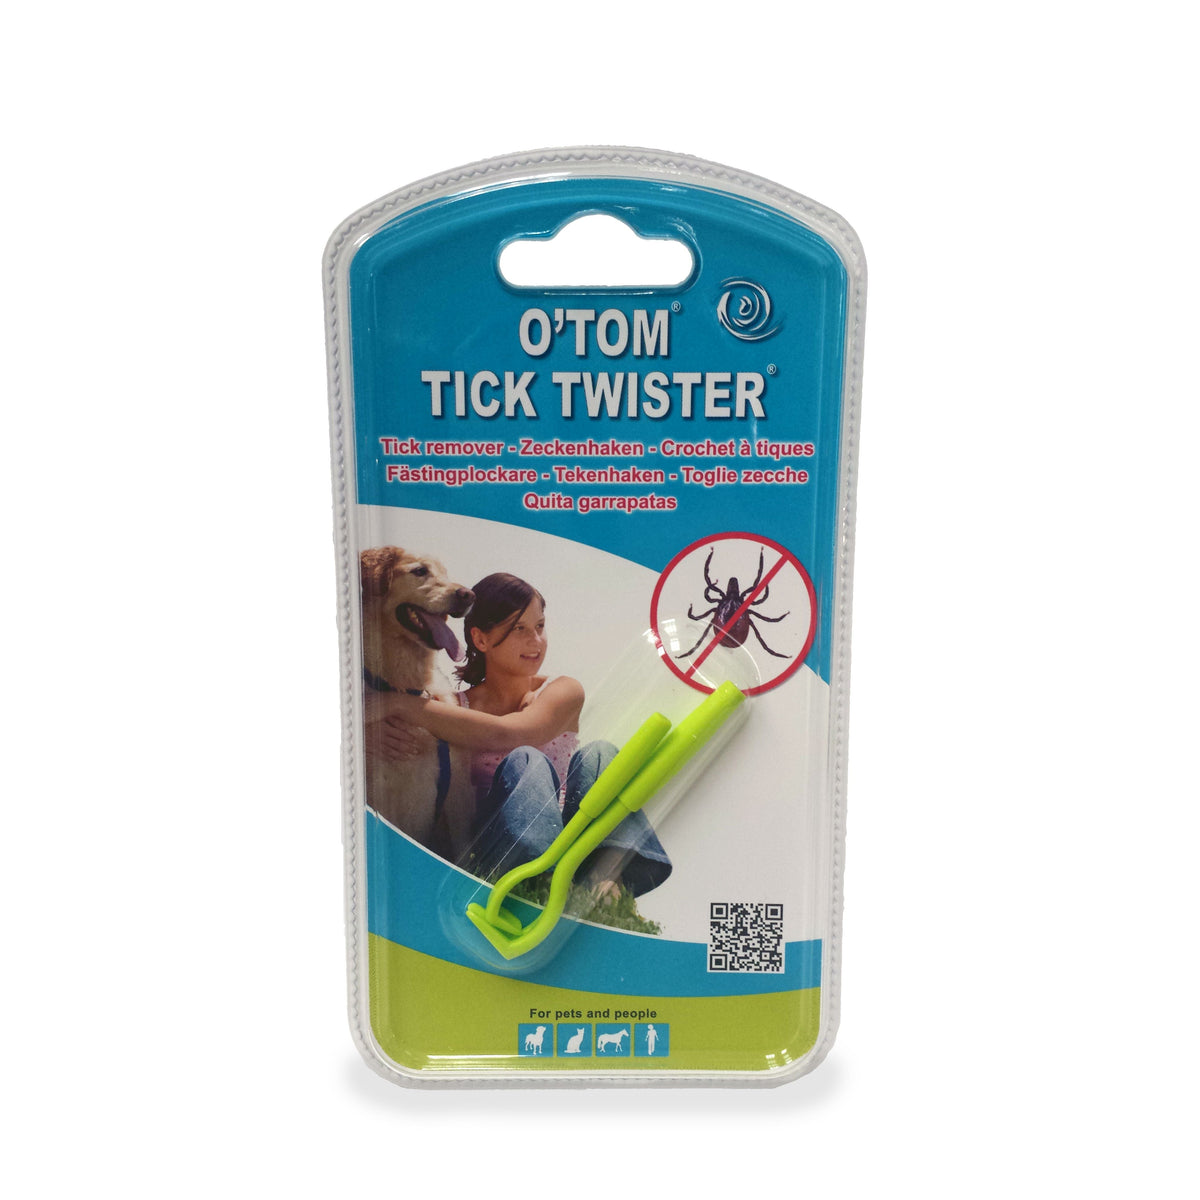 O&#39;tom tick twister Crochet à Tiques, Tick Twister